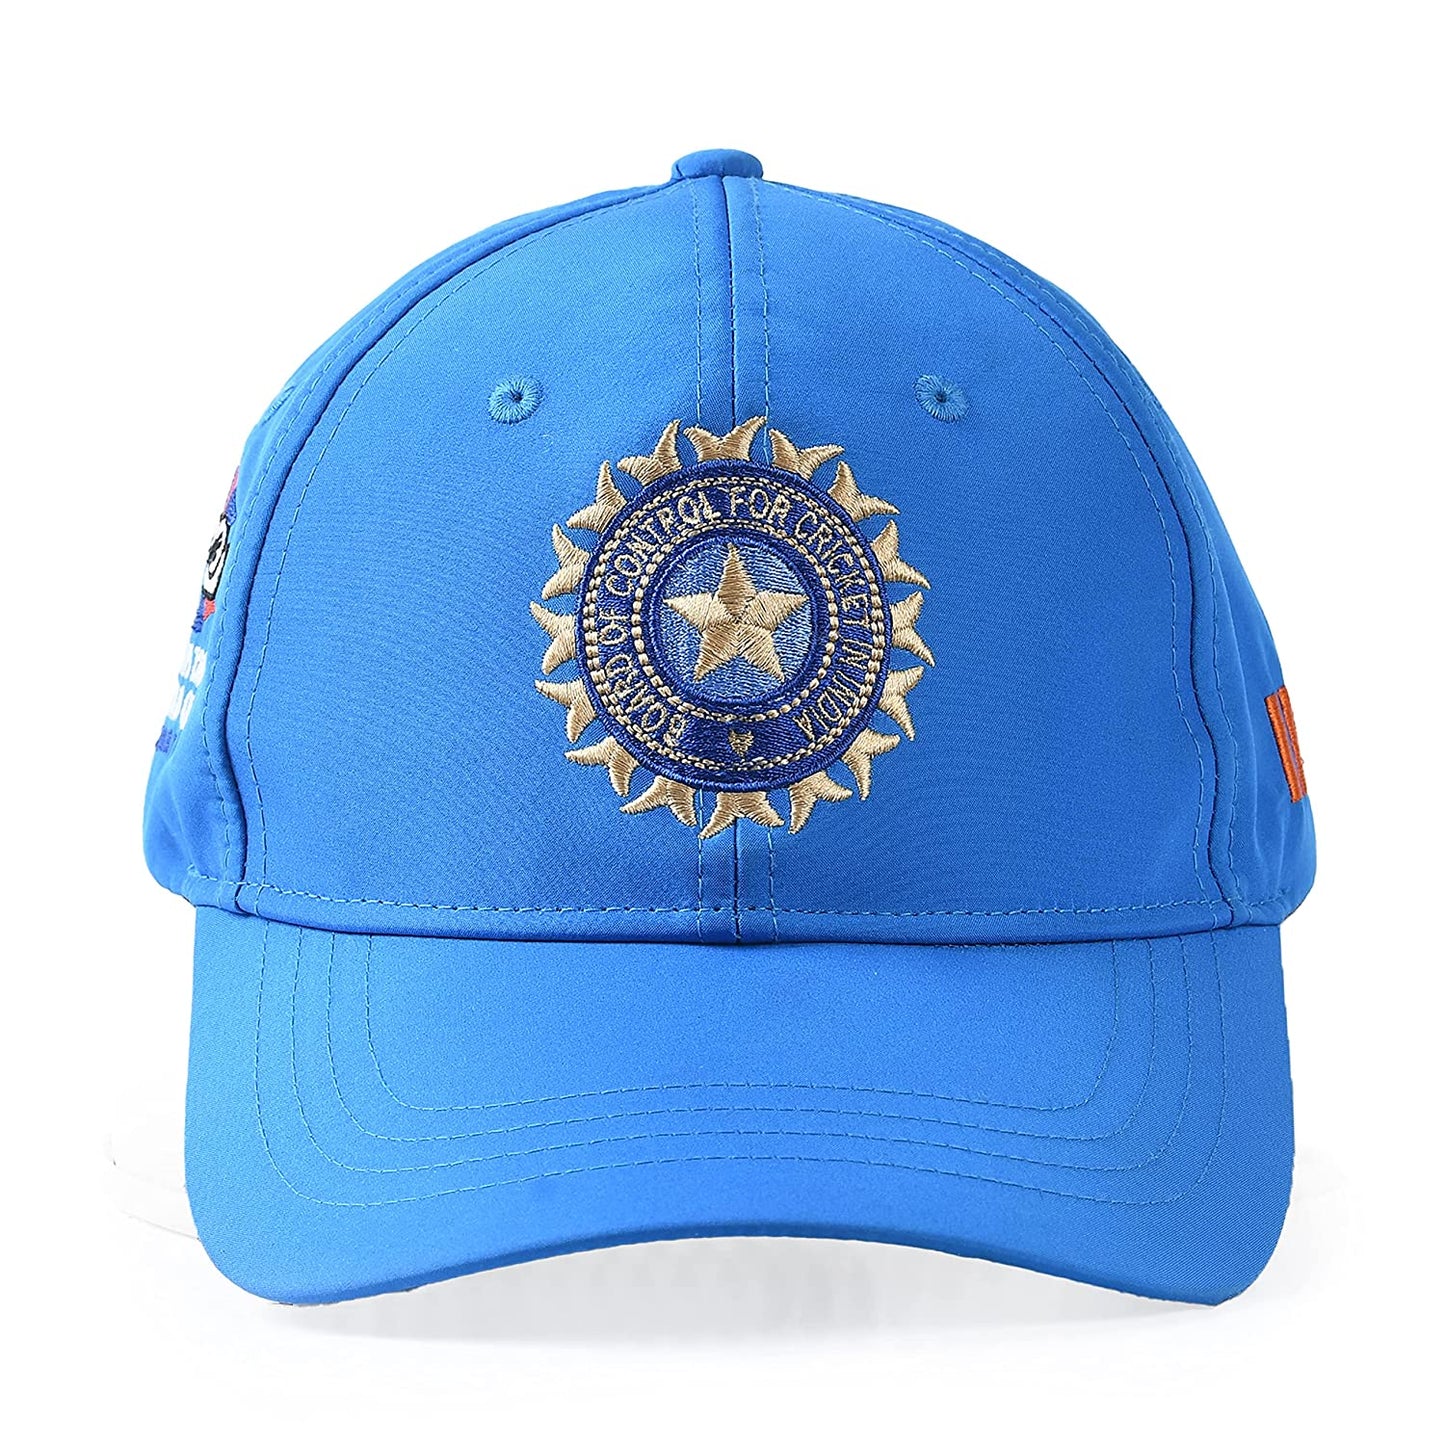 Playr T20 Cap, India Blue - Best Price online Prokicksports.com